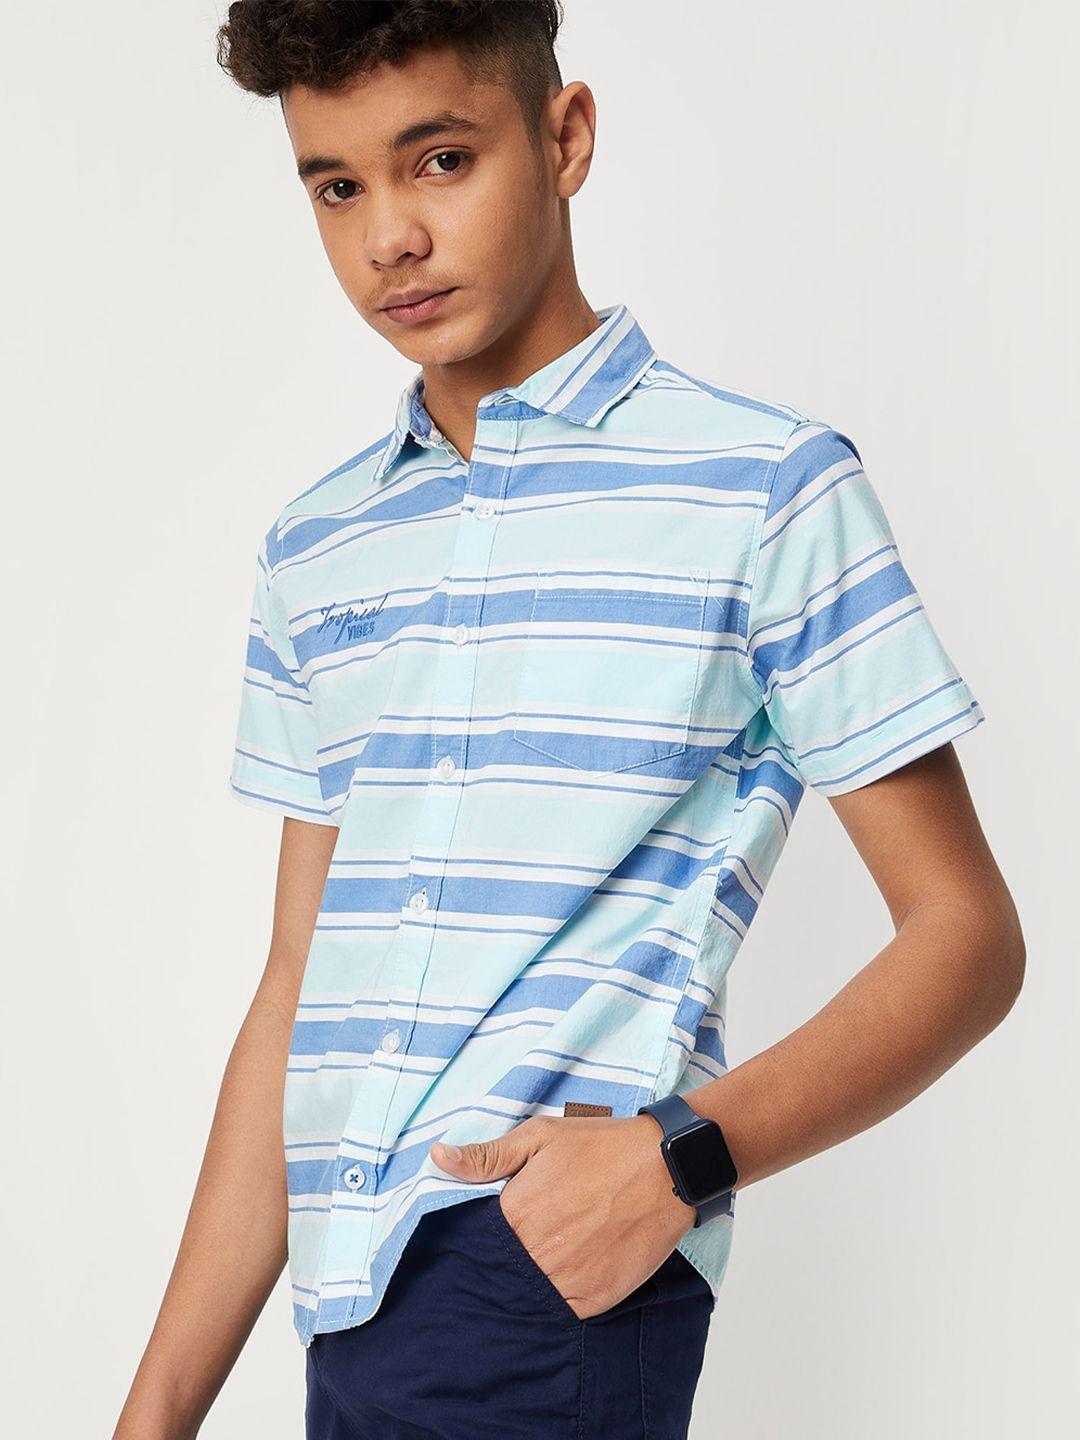 max-boys-horizontal-stripes-striped-pure-cotton-casual-shirt